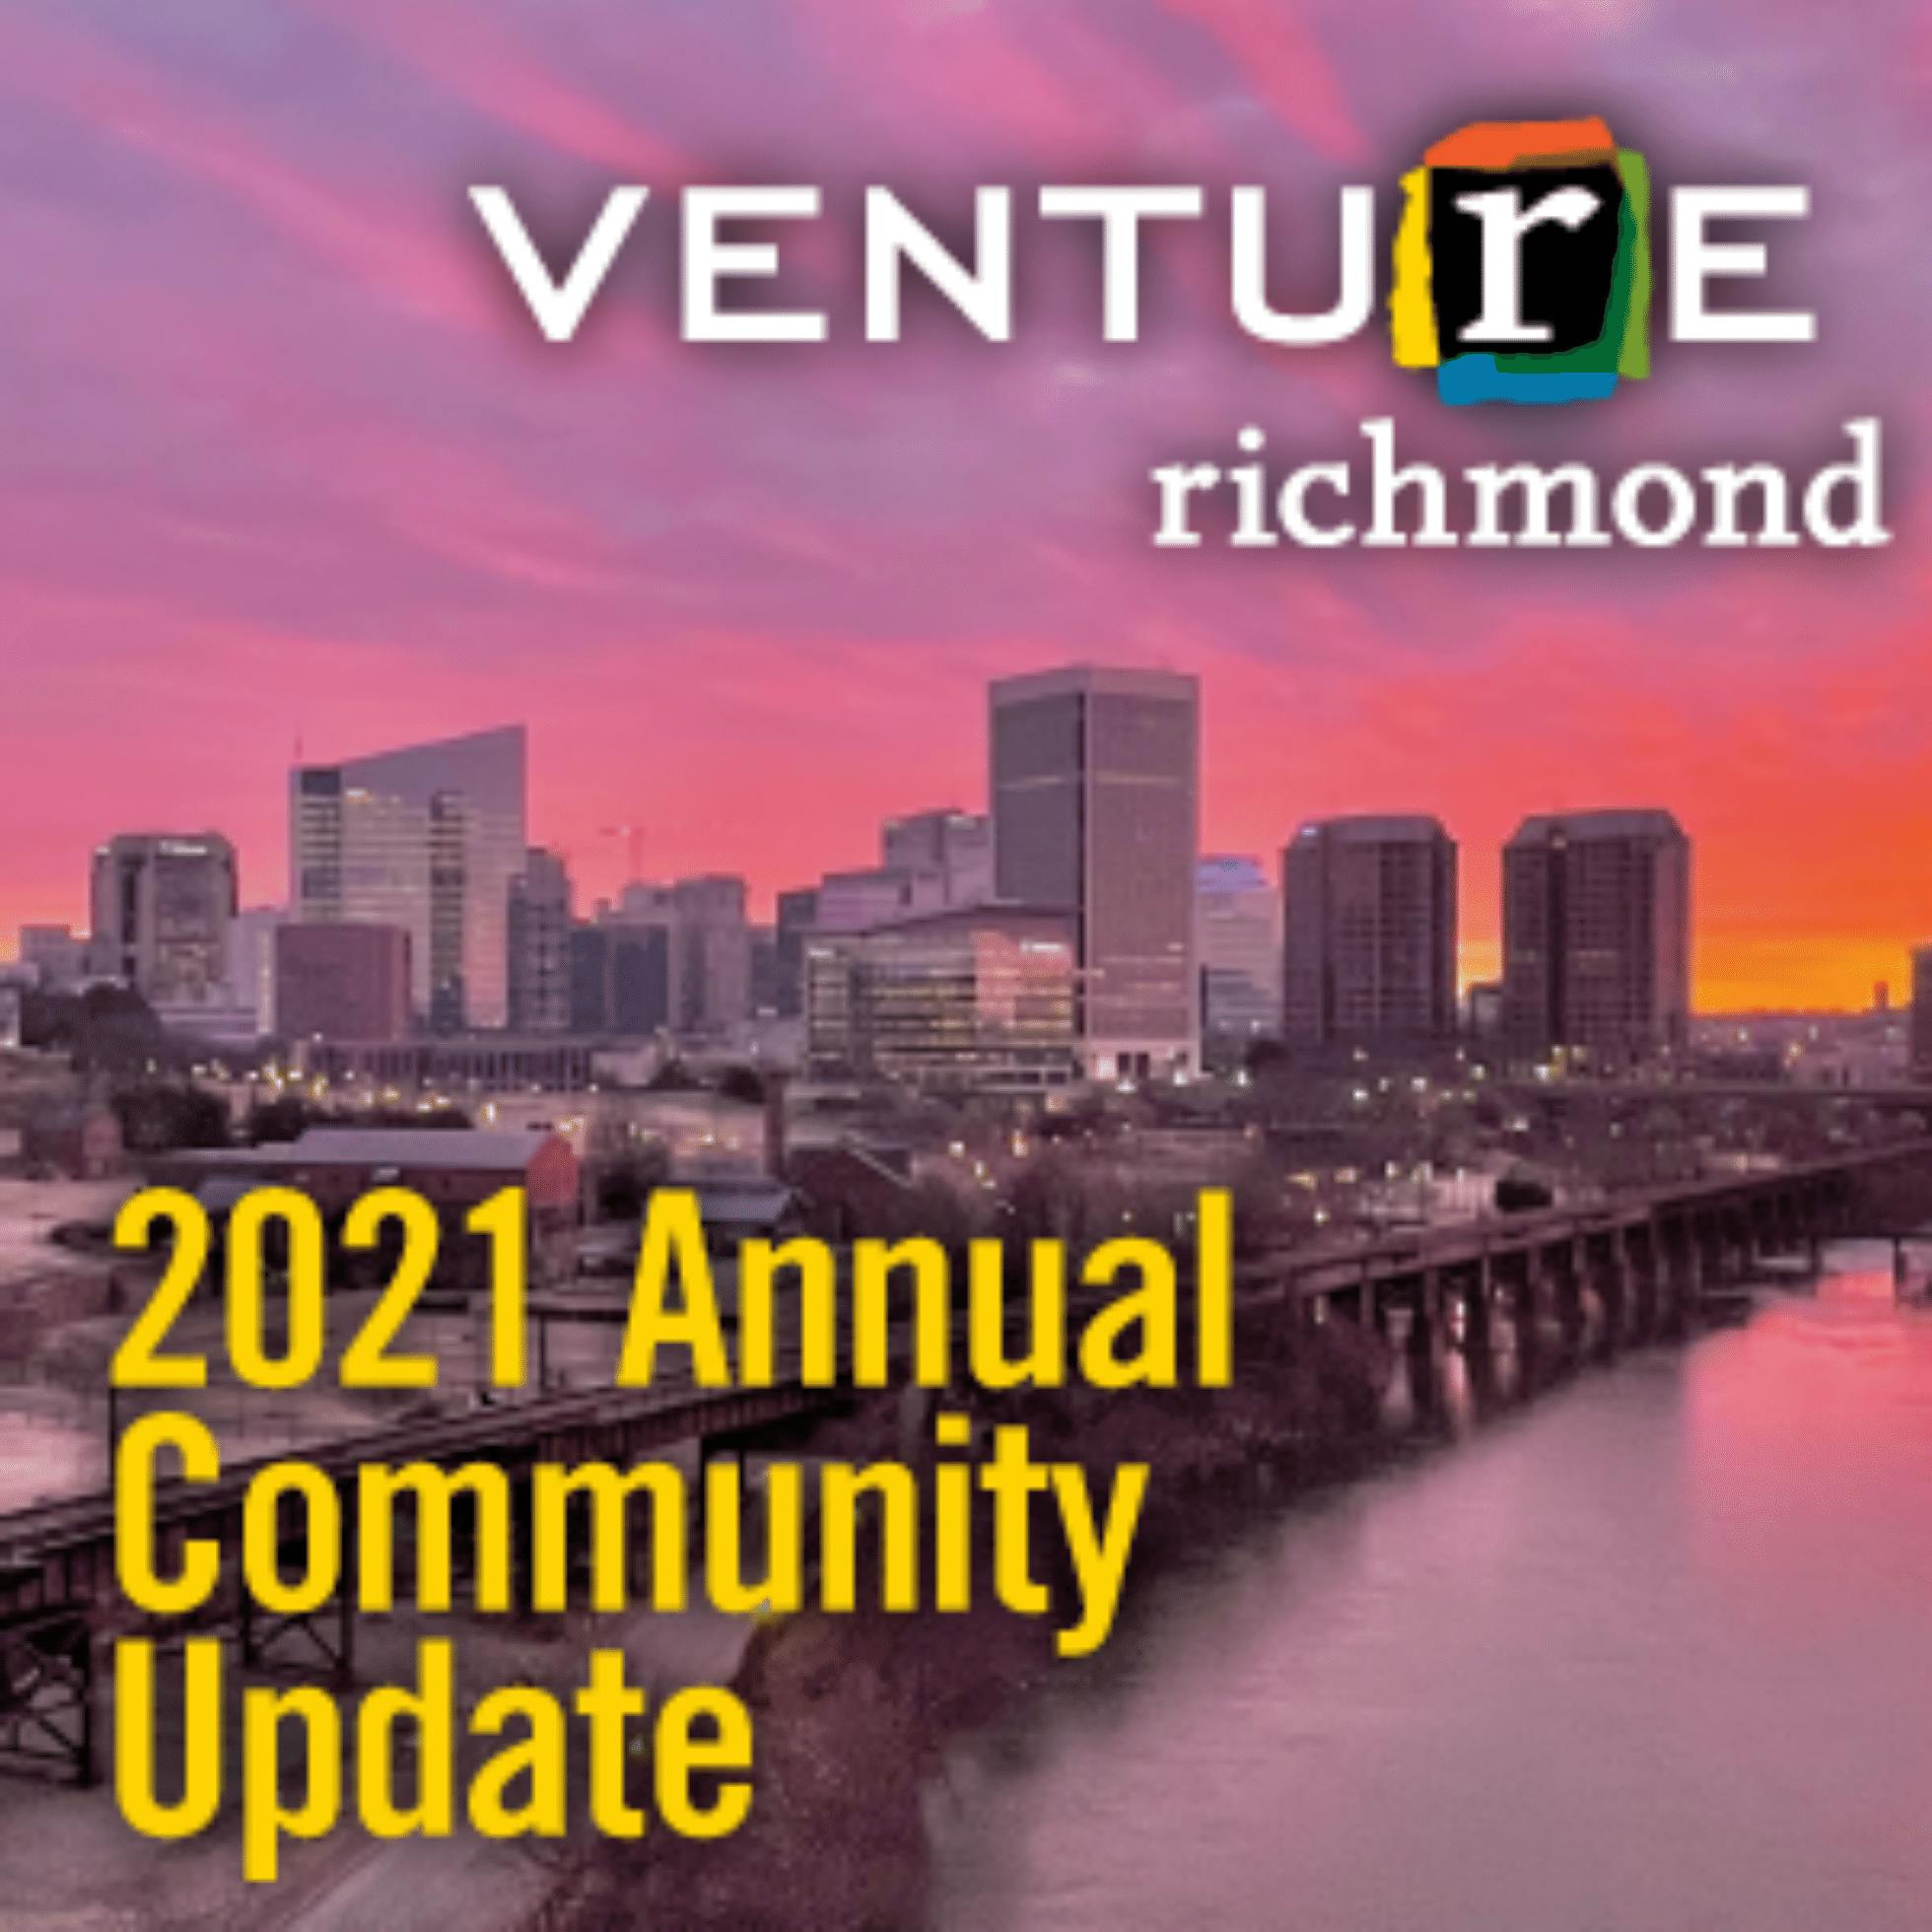 Venture Richmond 2021 Annual Community Update Meeting